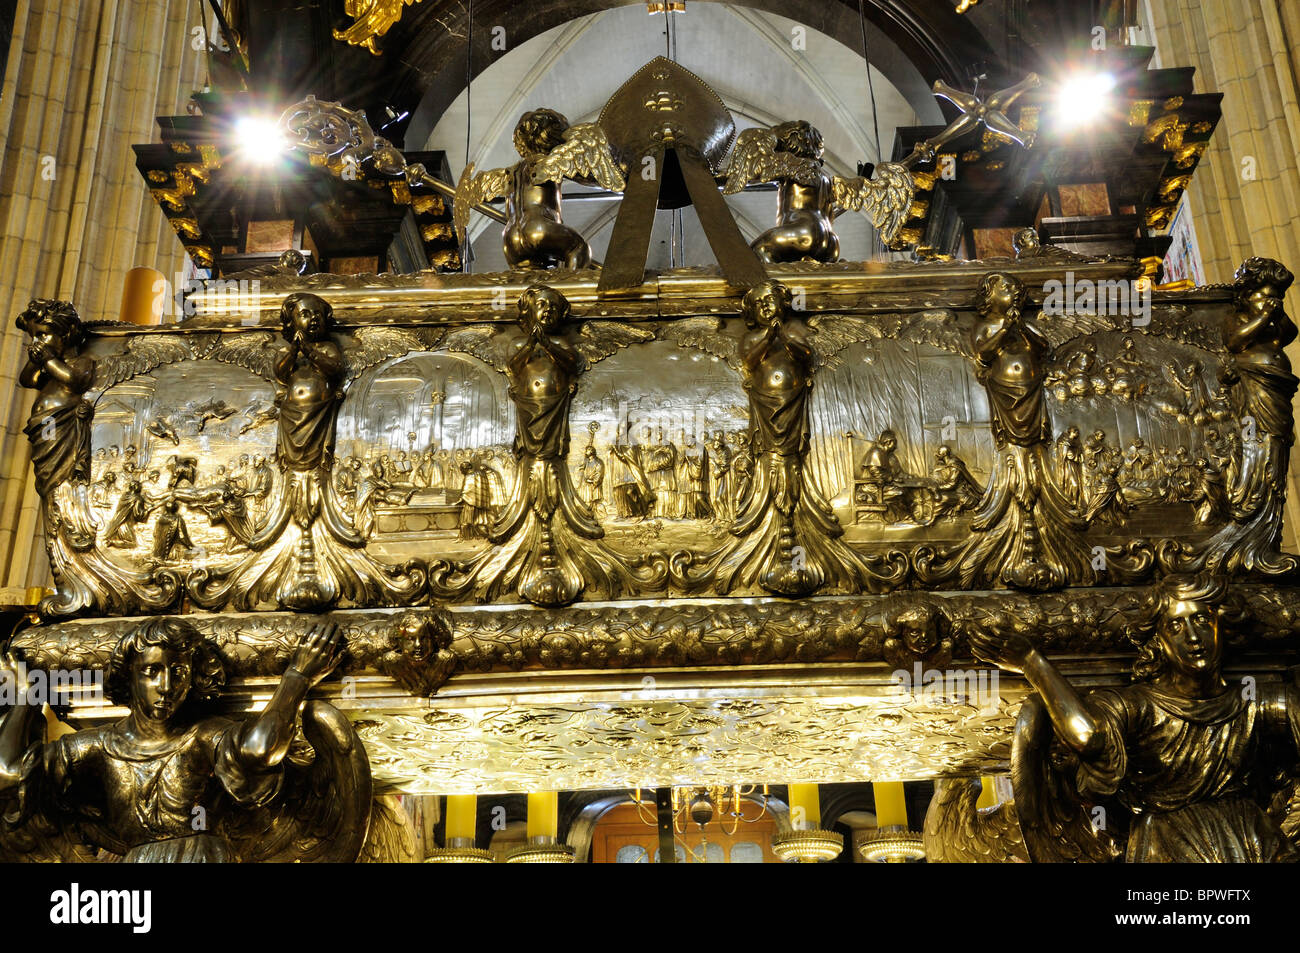 La tumba de san Estanislao de plata en la catedral de Wawel, en Cracovia. Foto de stock